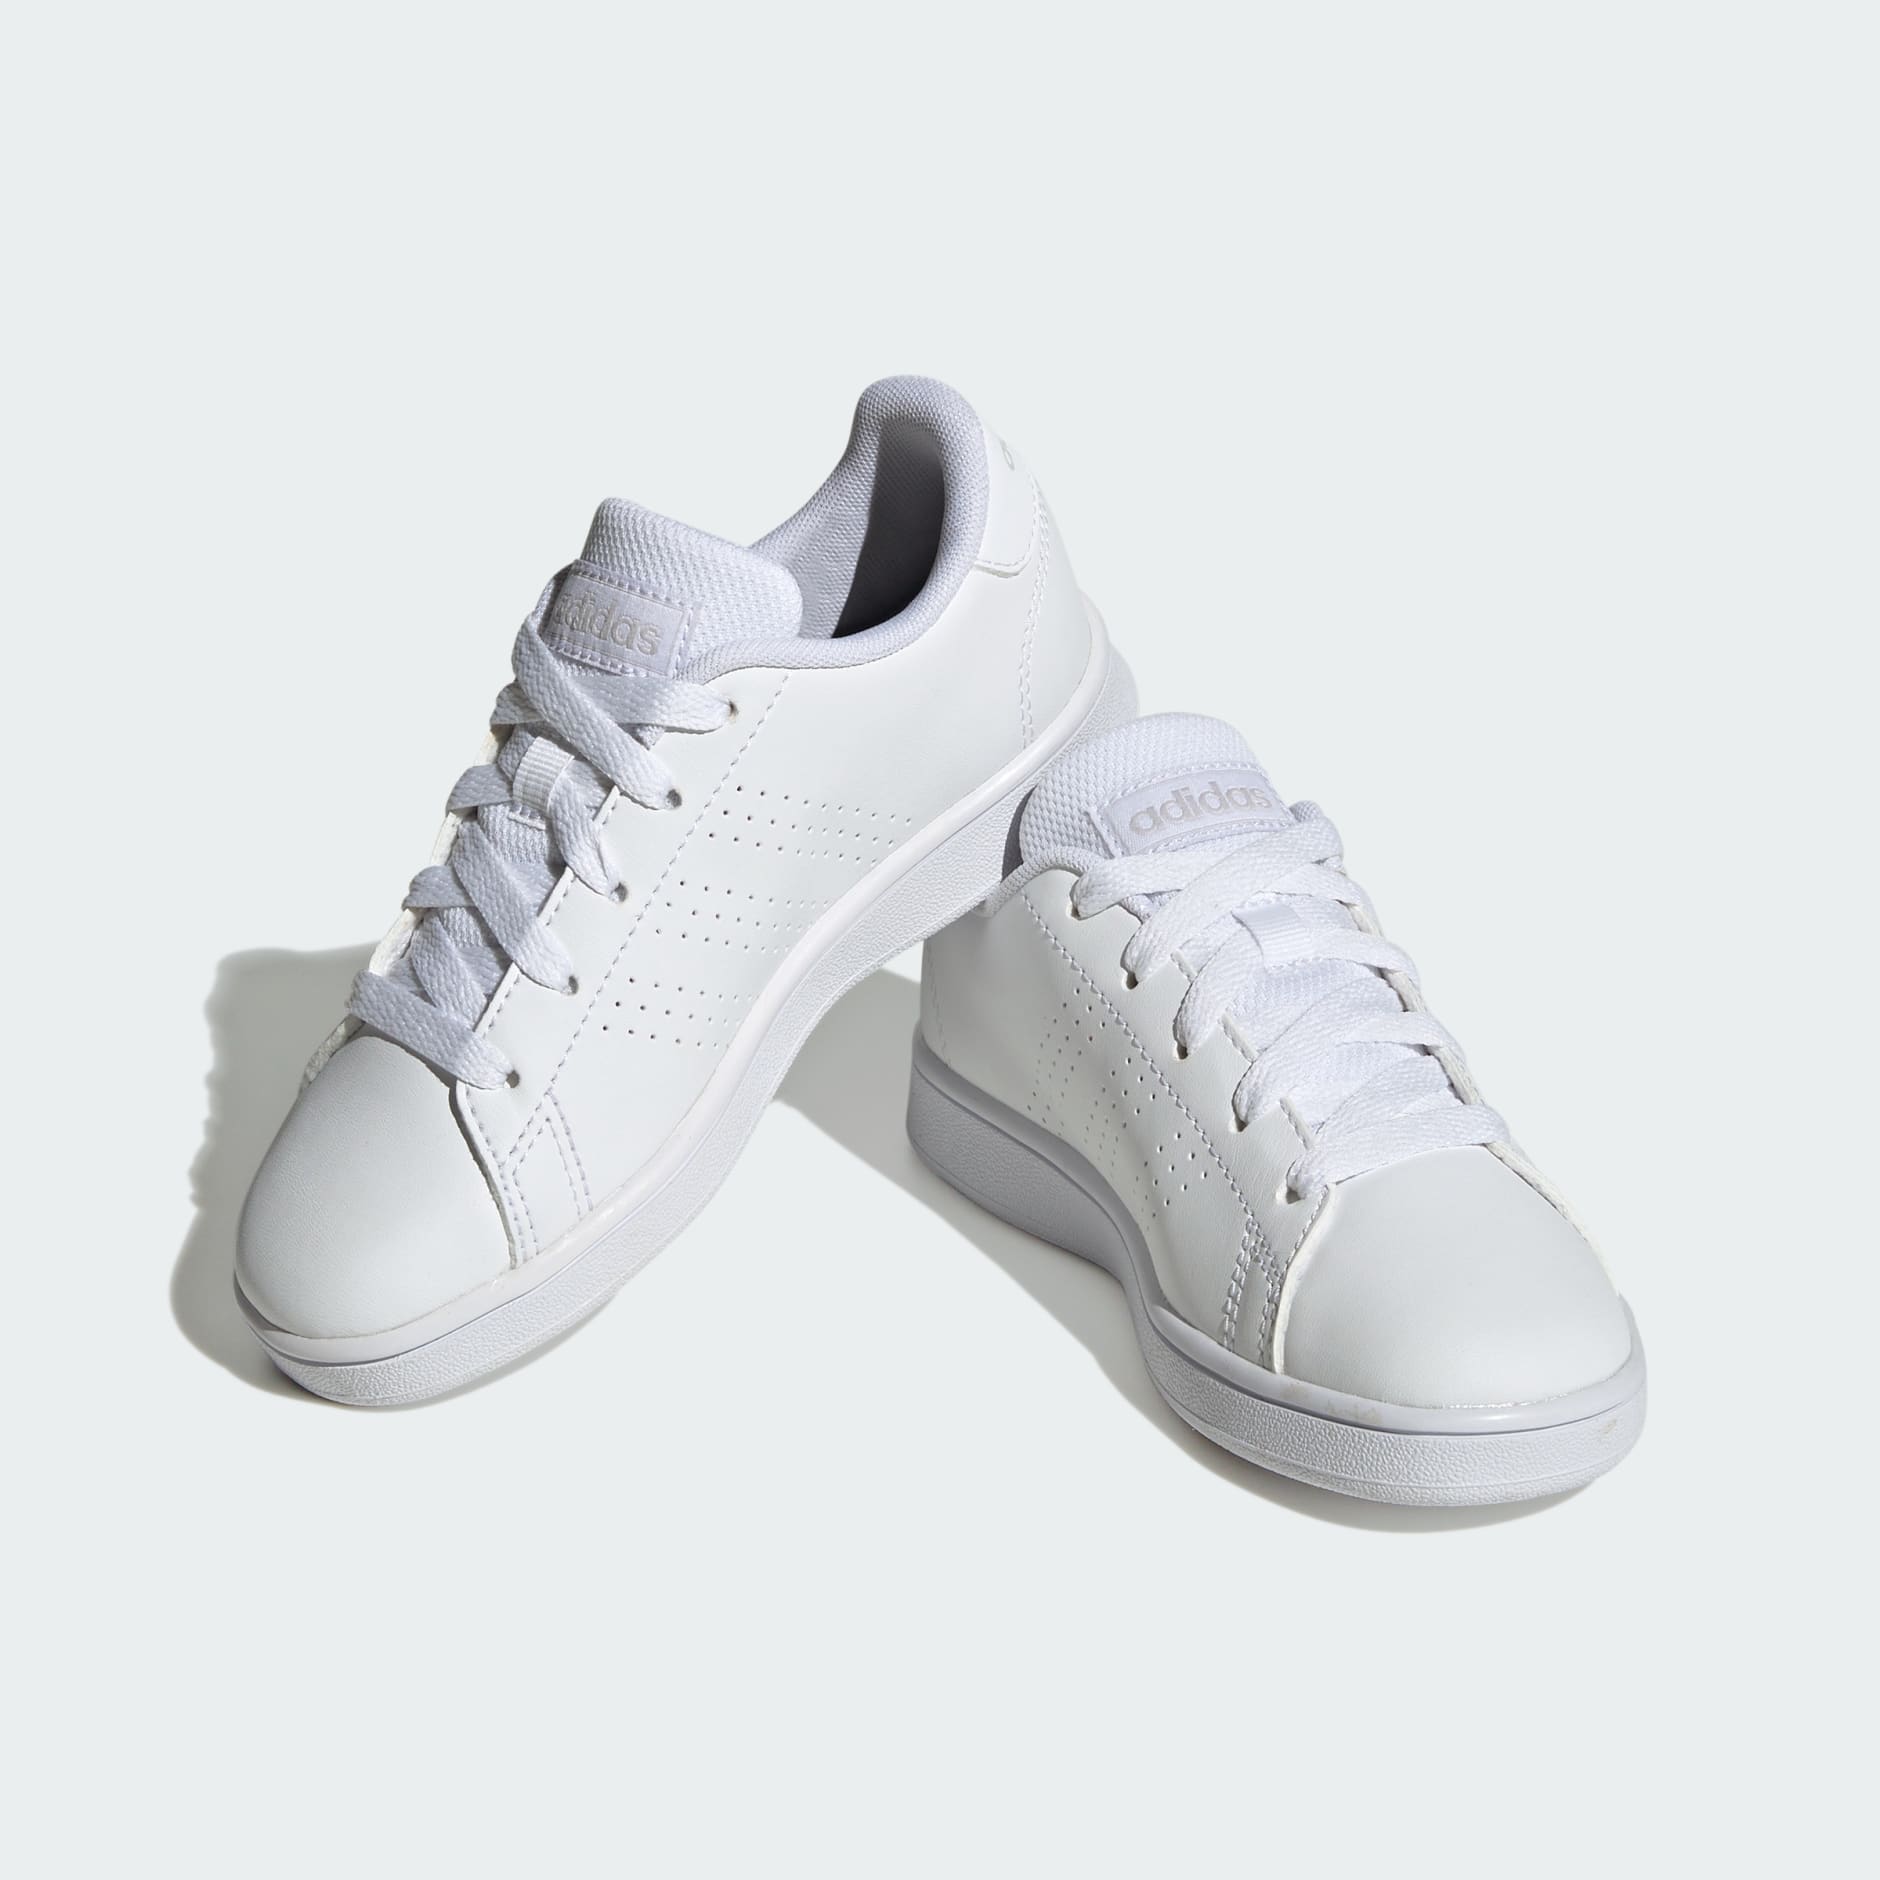 Shoes - Advantage Lifestyle Court Lace Shoes - White | adidas South Africa